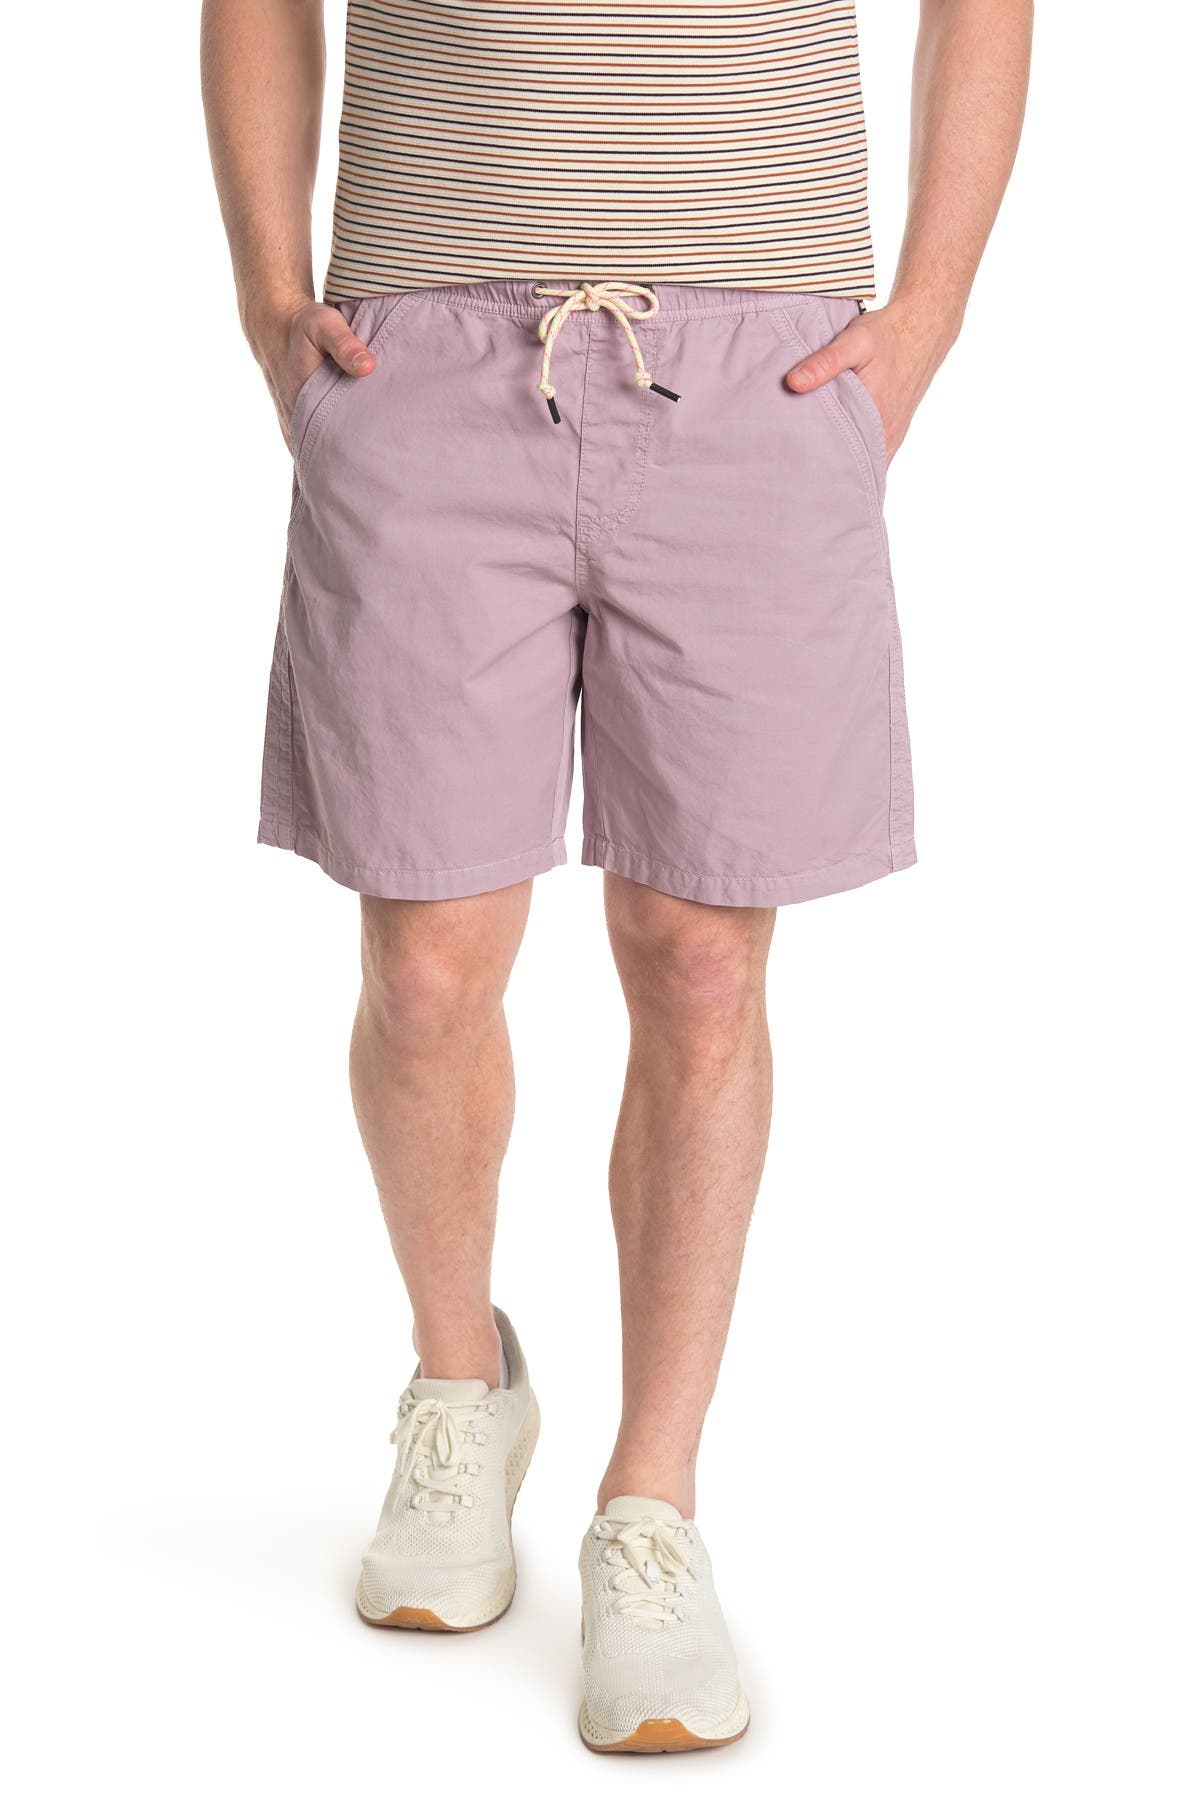 Union Denim Sun-sational Pull-on Woven Shorts In Dark Purple4